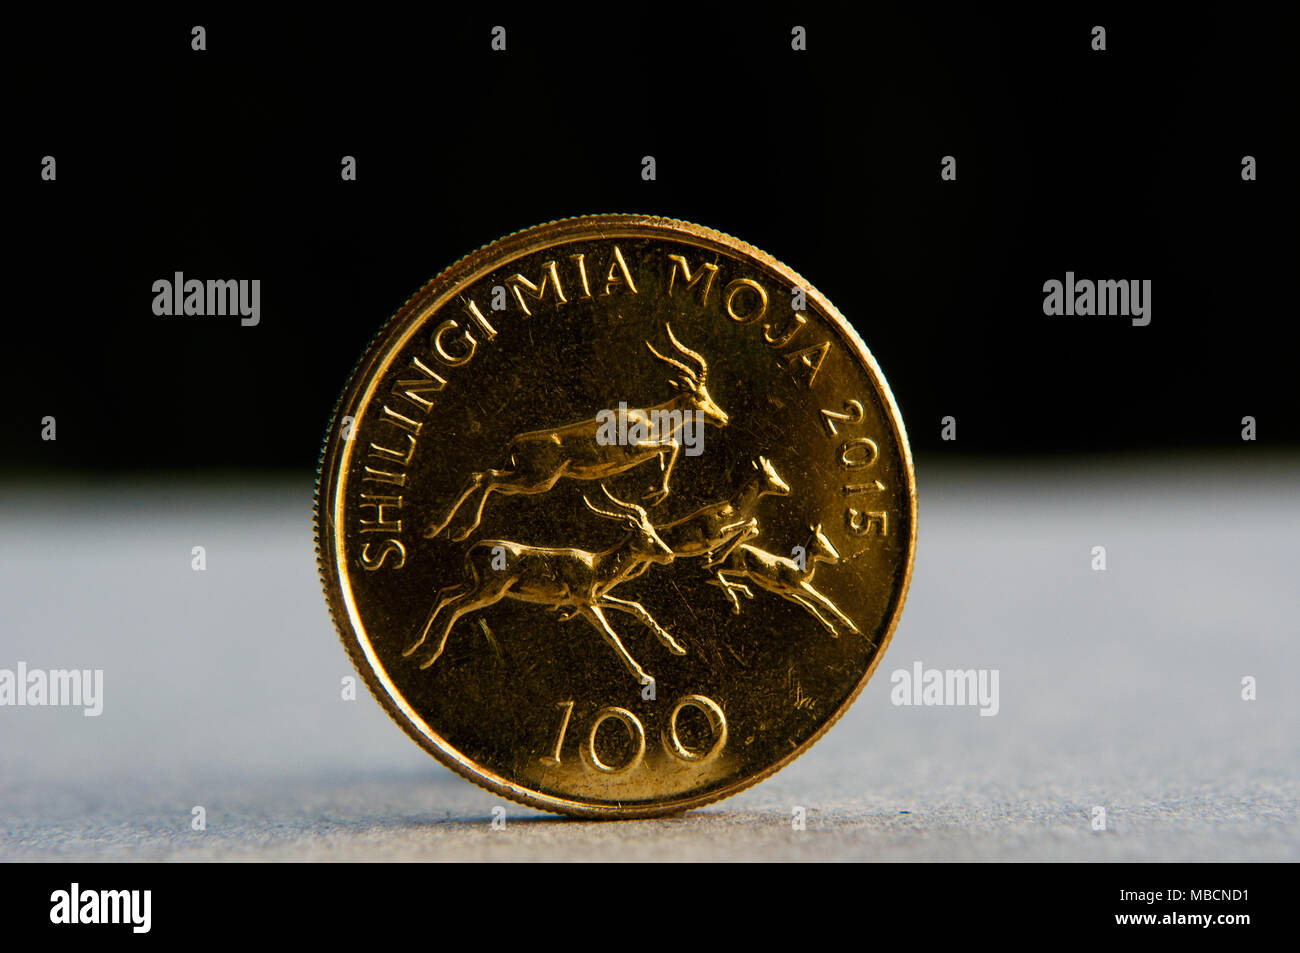 100 shilling Tanzania shilling coin, depicting leaping impalas,  in semi studio setting, Dar es Salaam, Tanzania Stock Photo